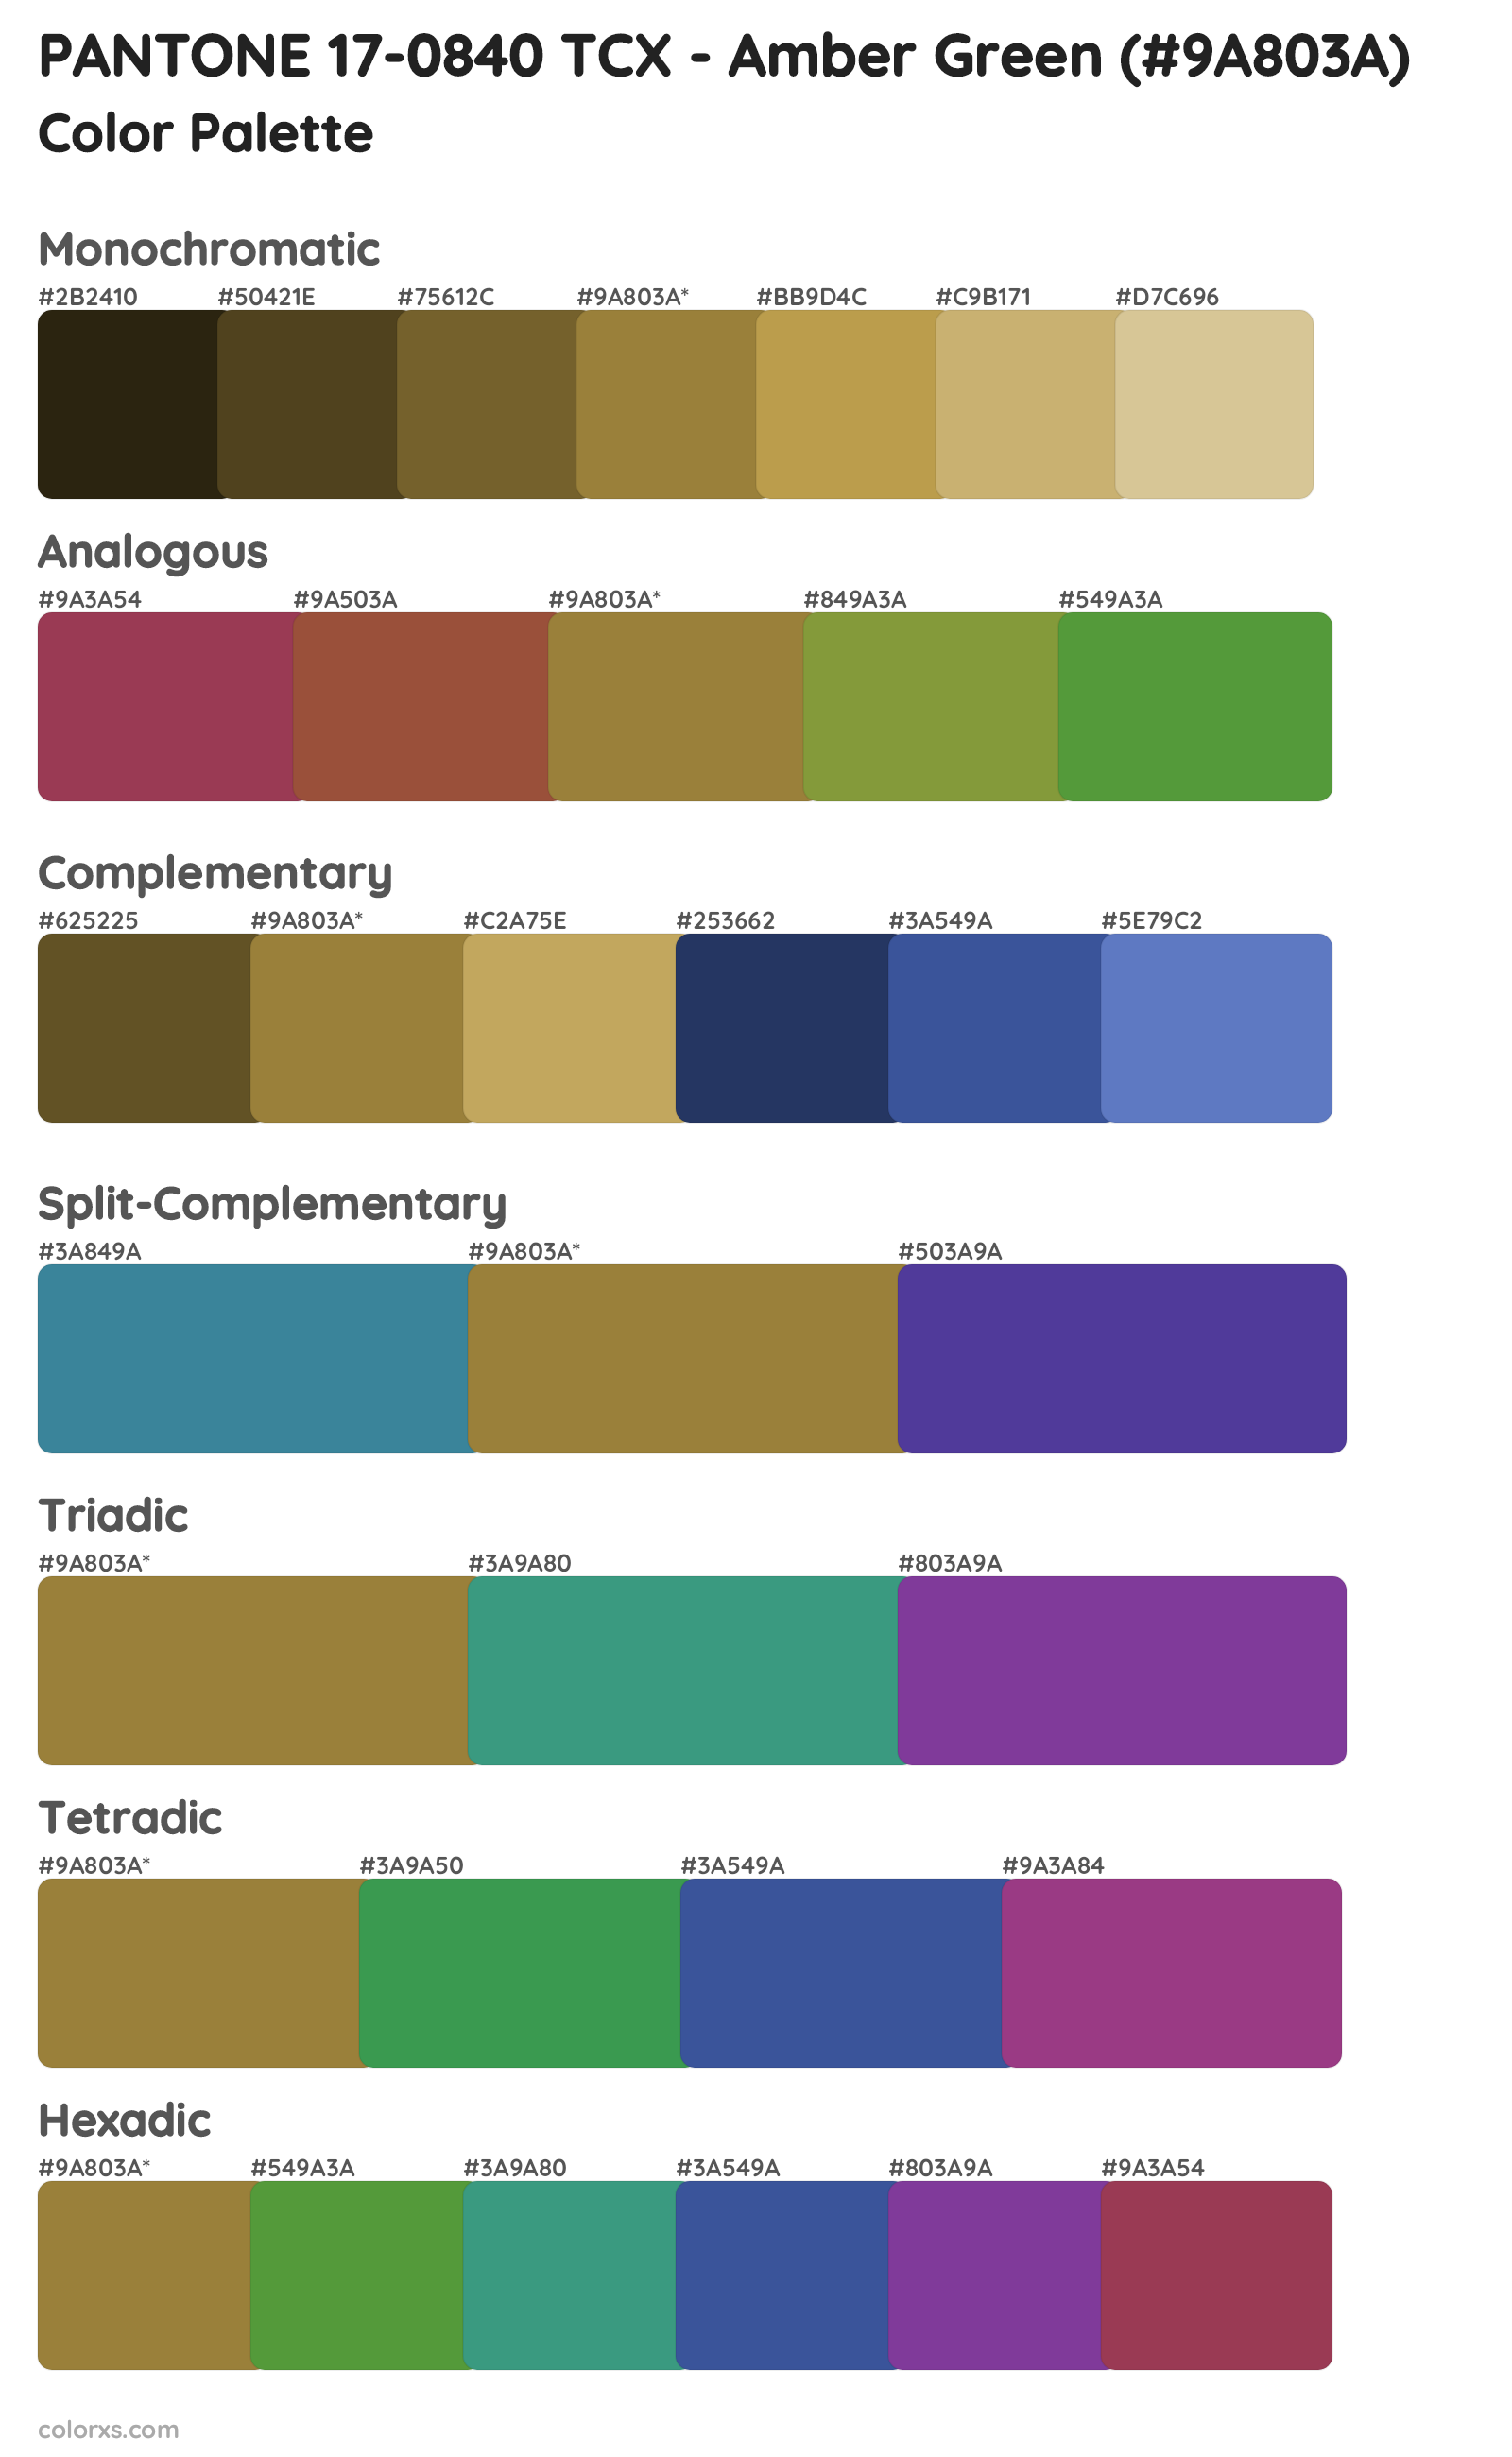 PANTONE 17-0840 TCX - Amber Green Color Scheme Palettes